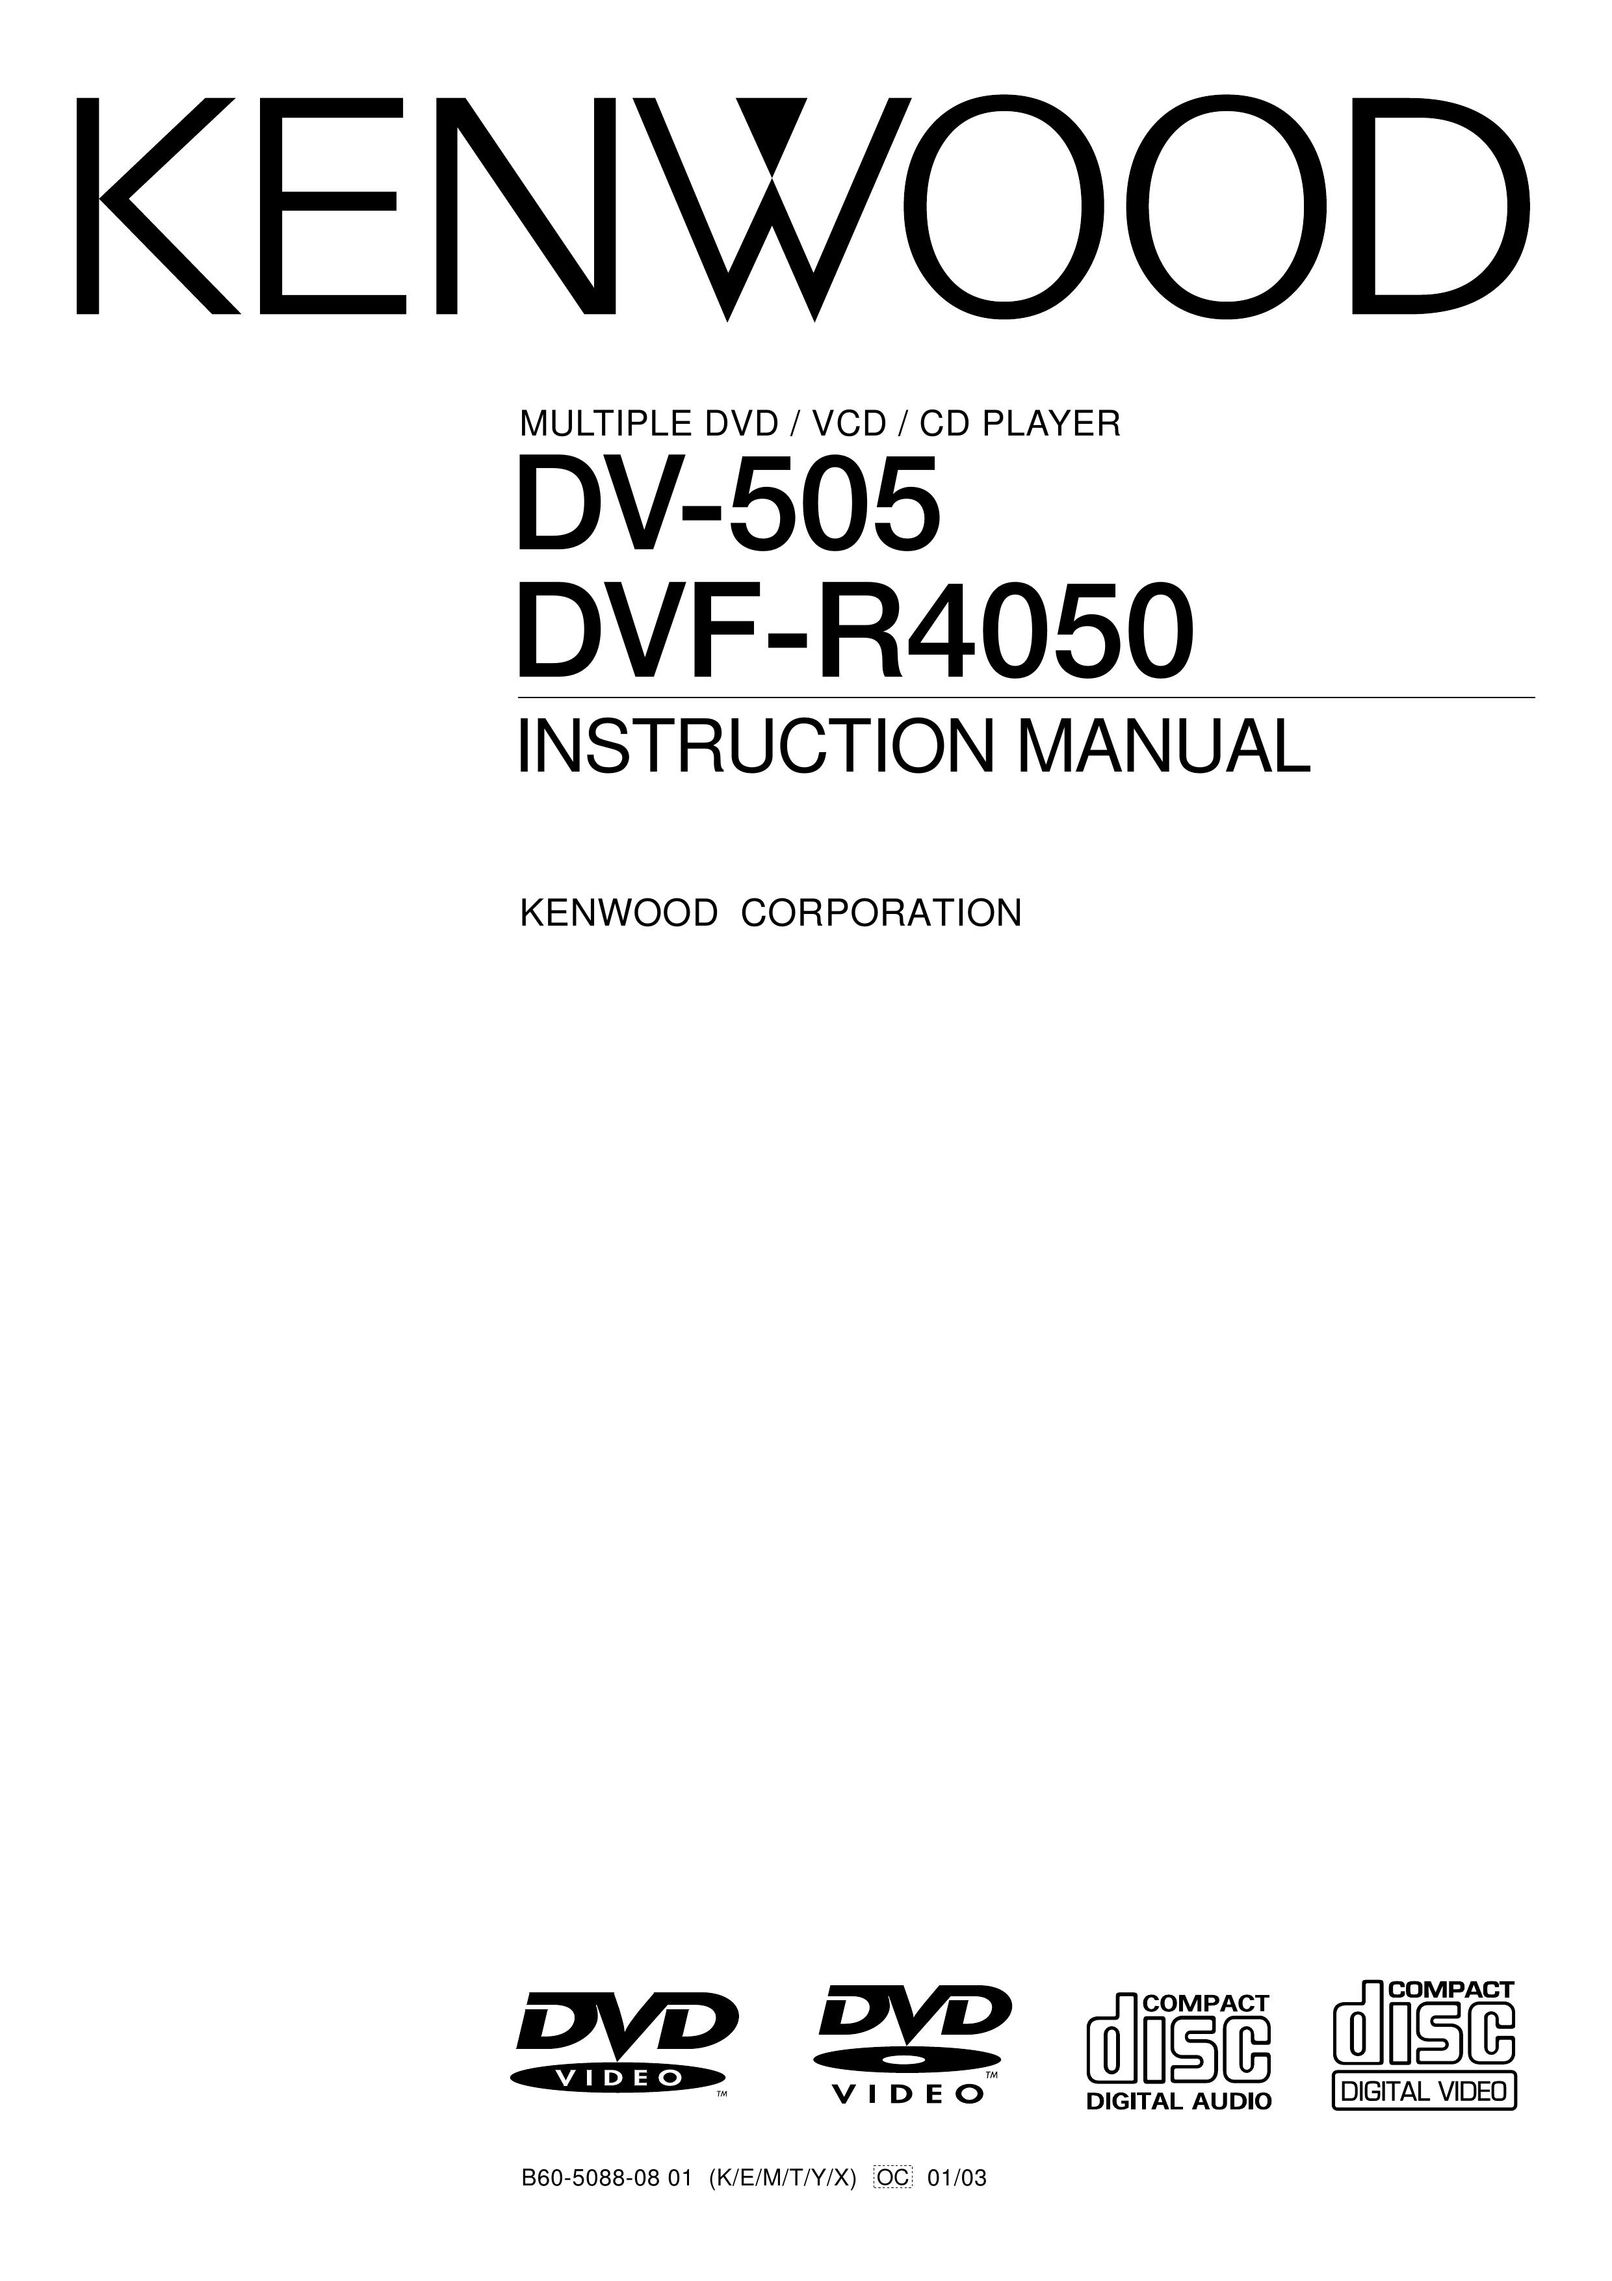 Kenwood DVF-R4050 Portable DVD Player User Manual